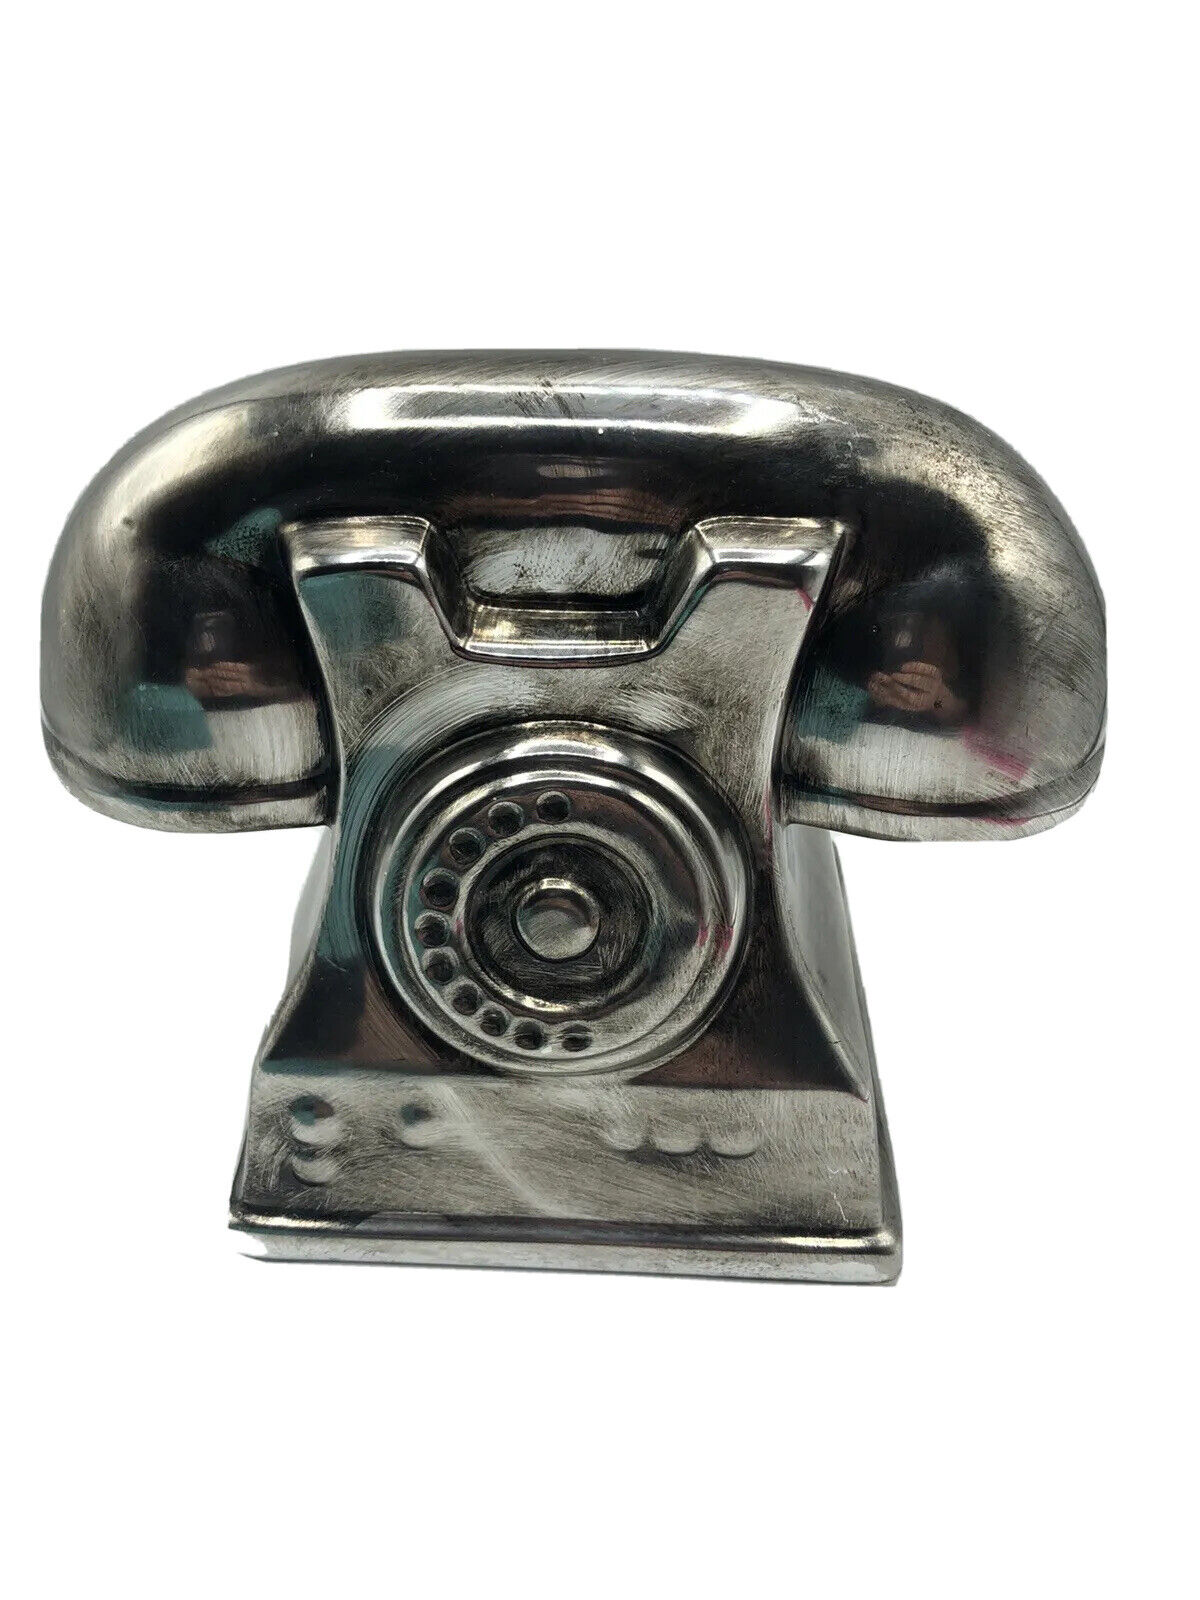 Large Adorable Ceramic Silver Vintage Style Telephone Figurine Fun